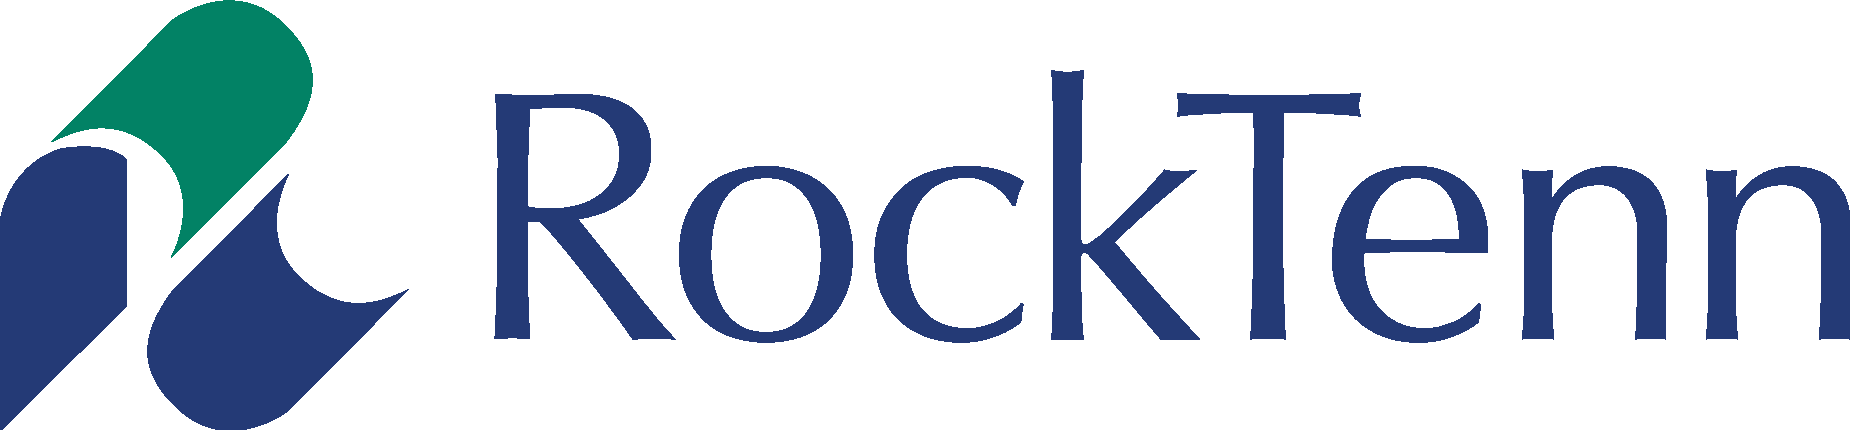 RockTenn Logo Vector